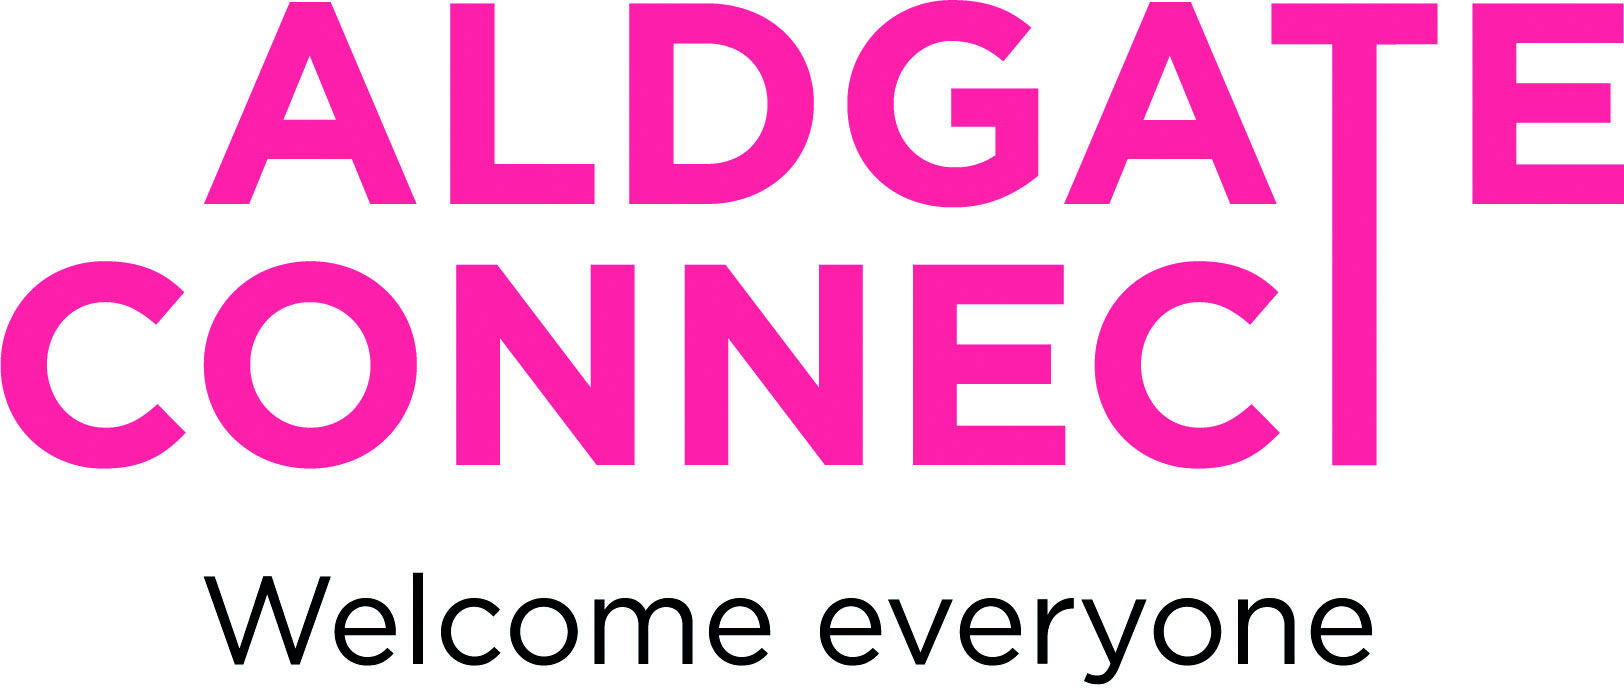 Addgate Connect logo